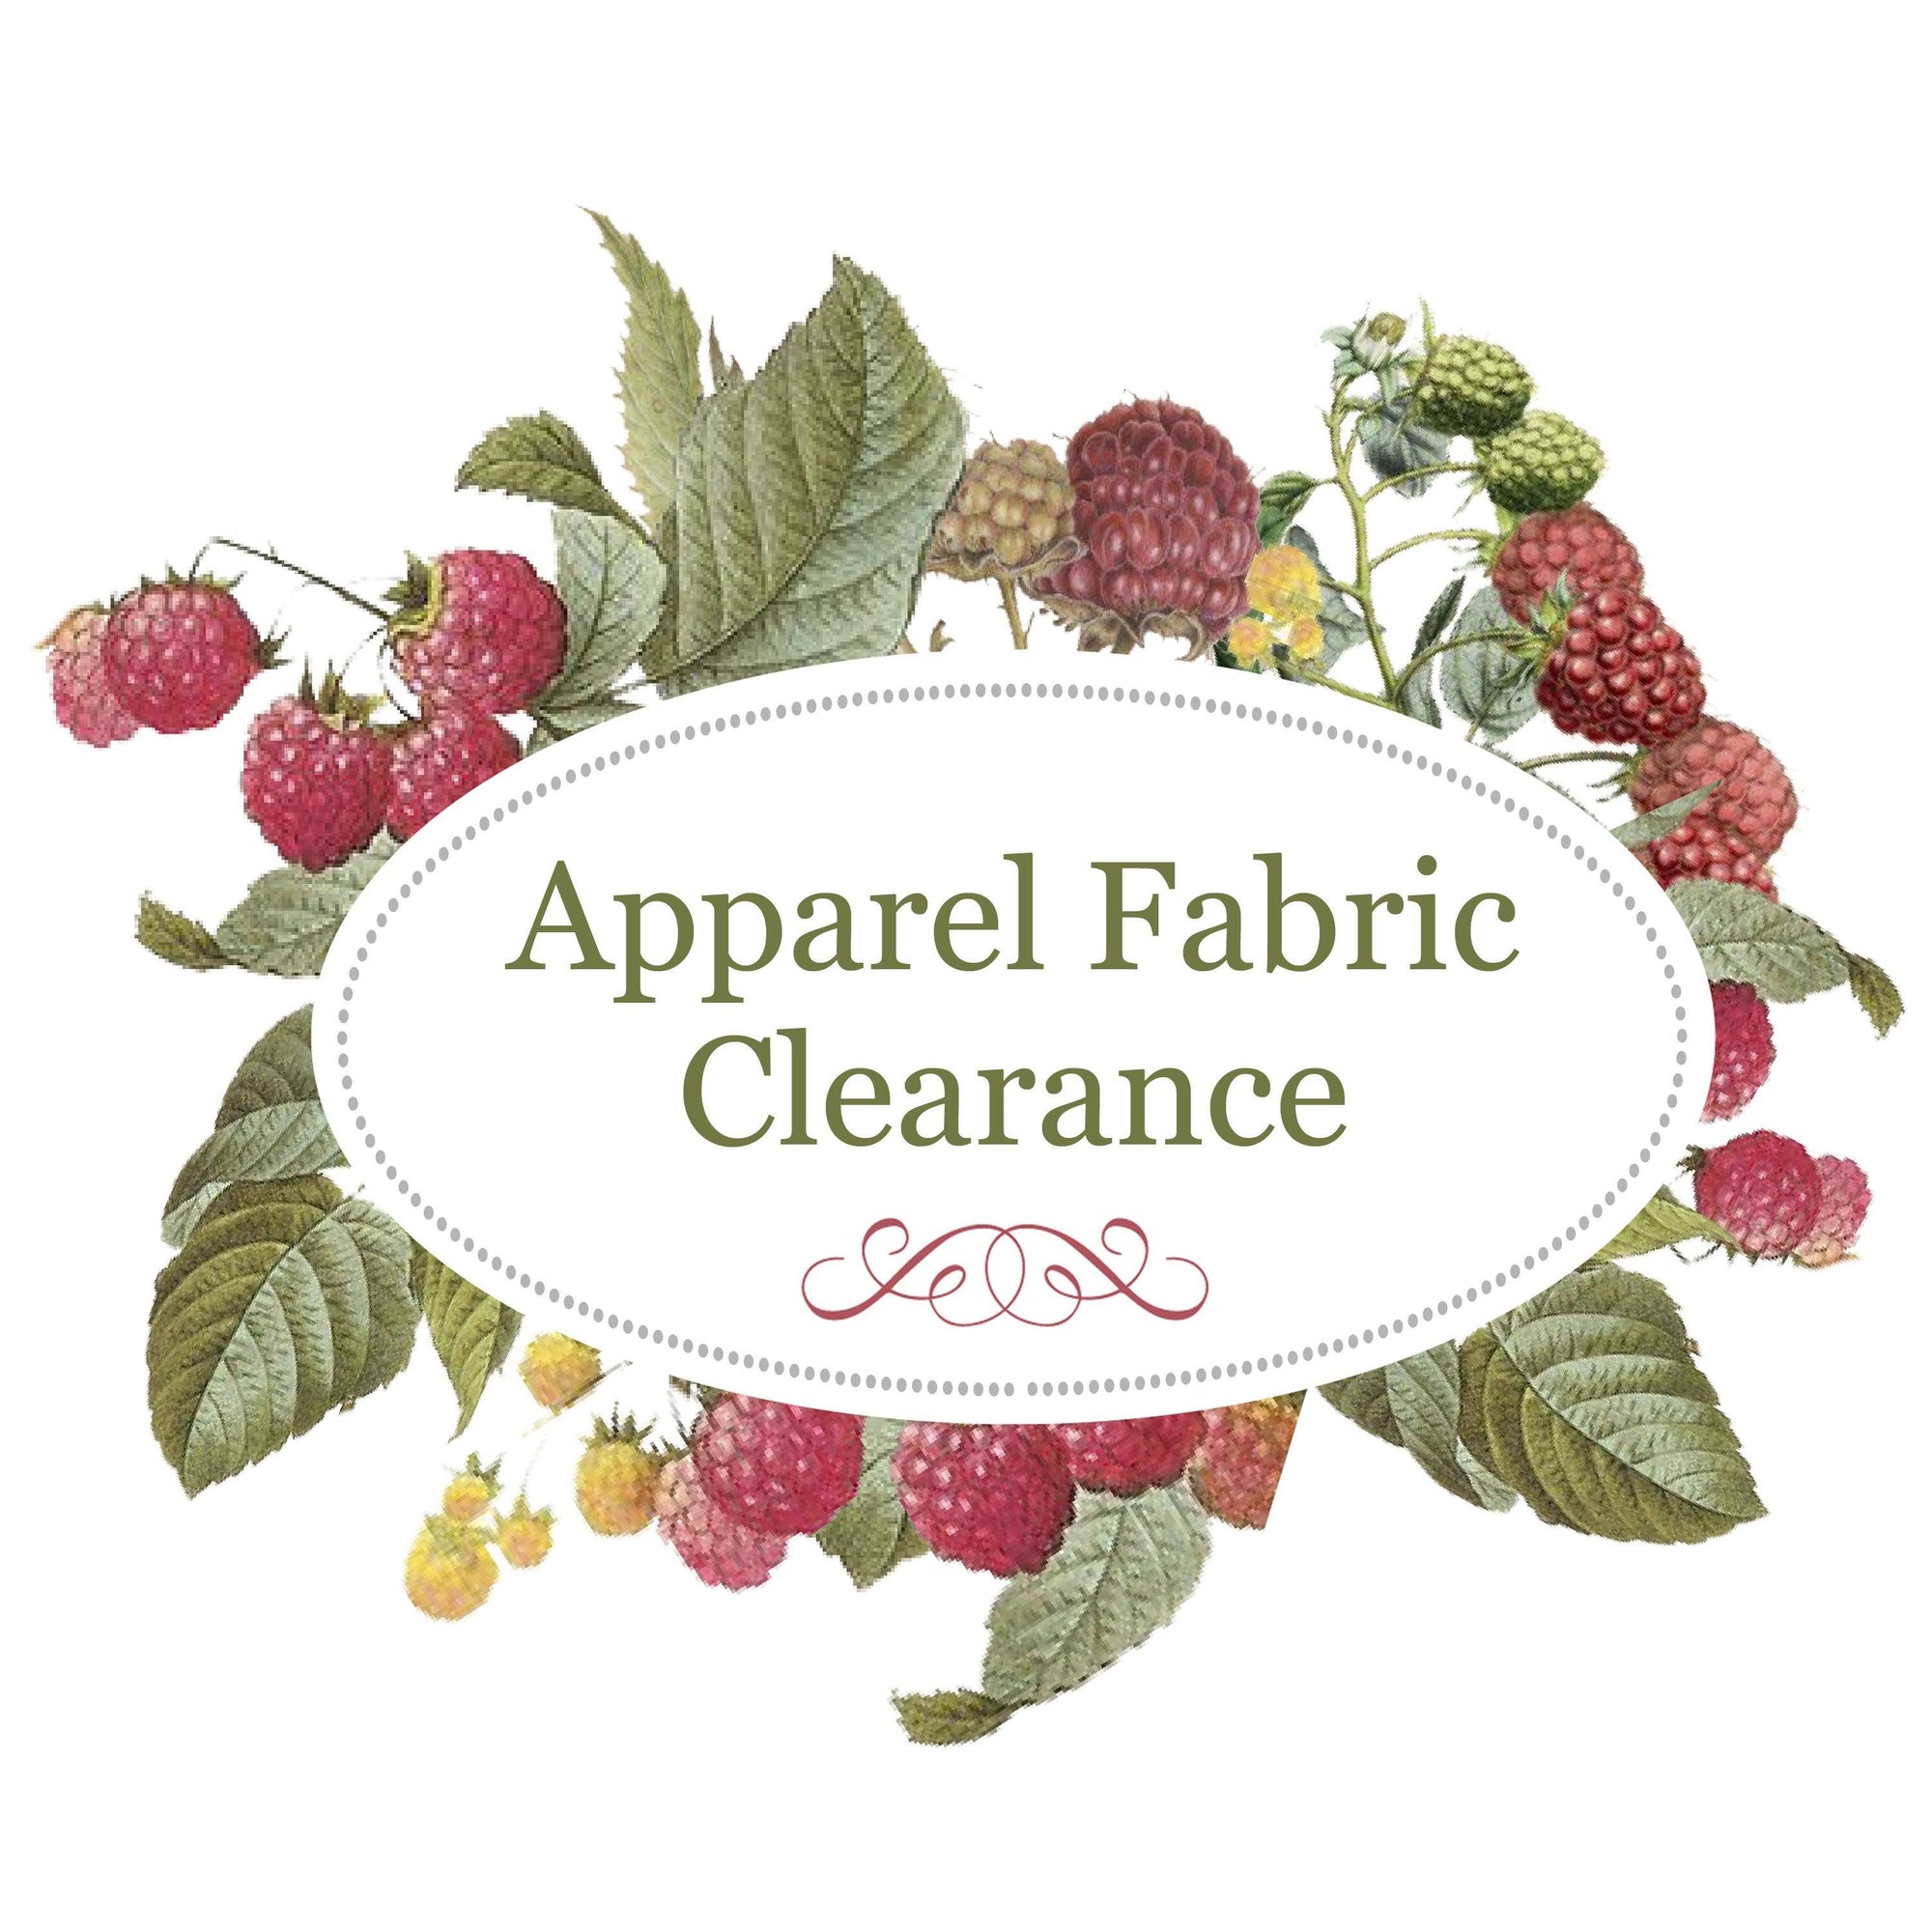 Apparel Fabric Clearance